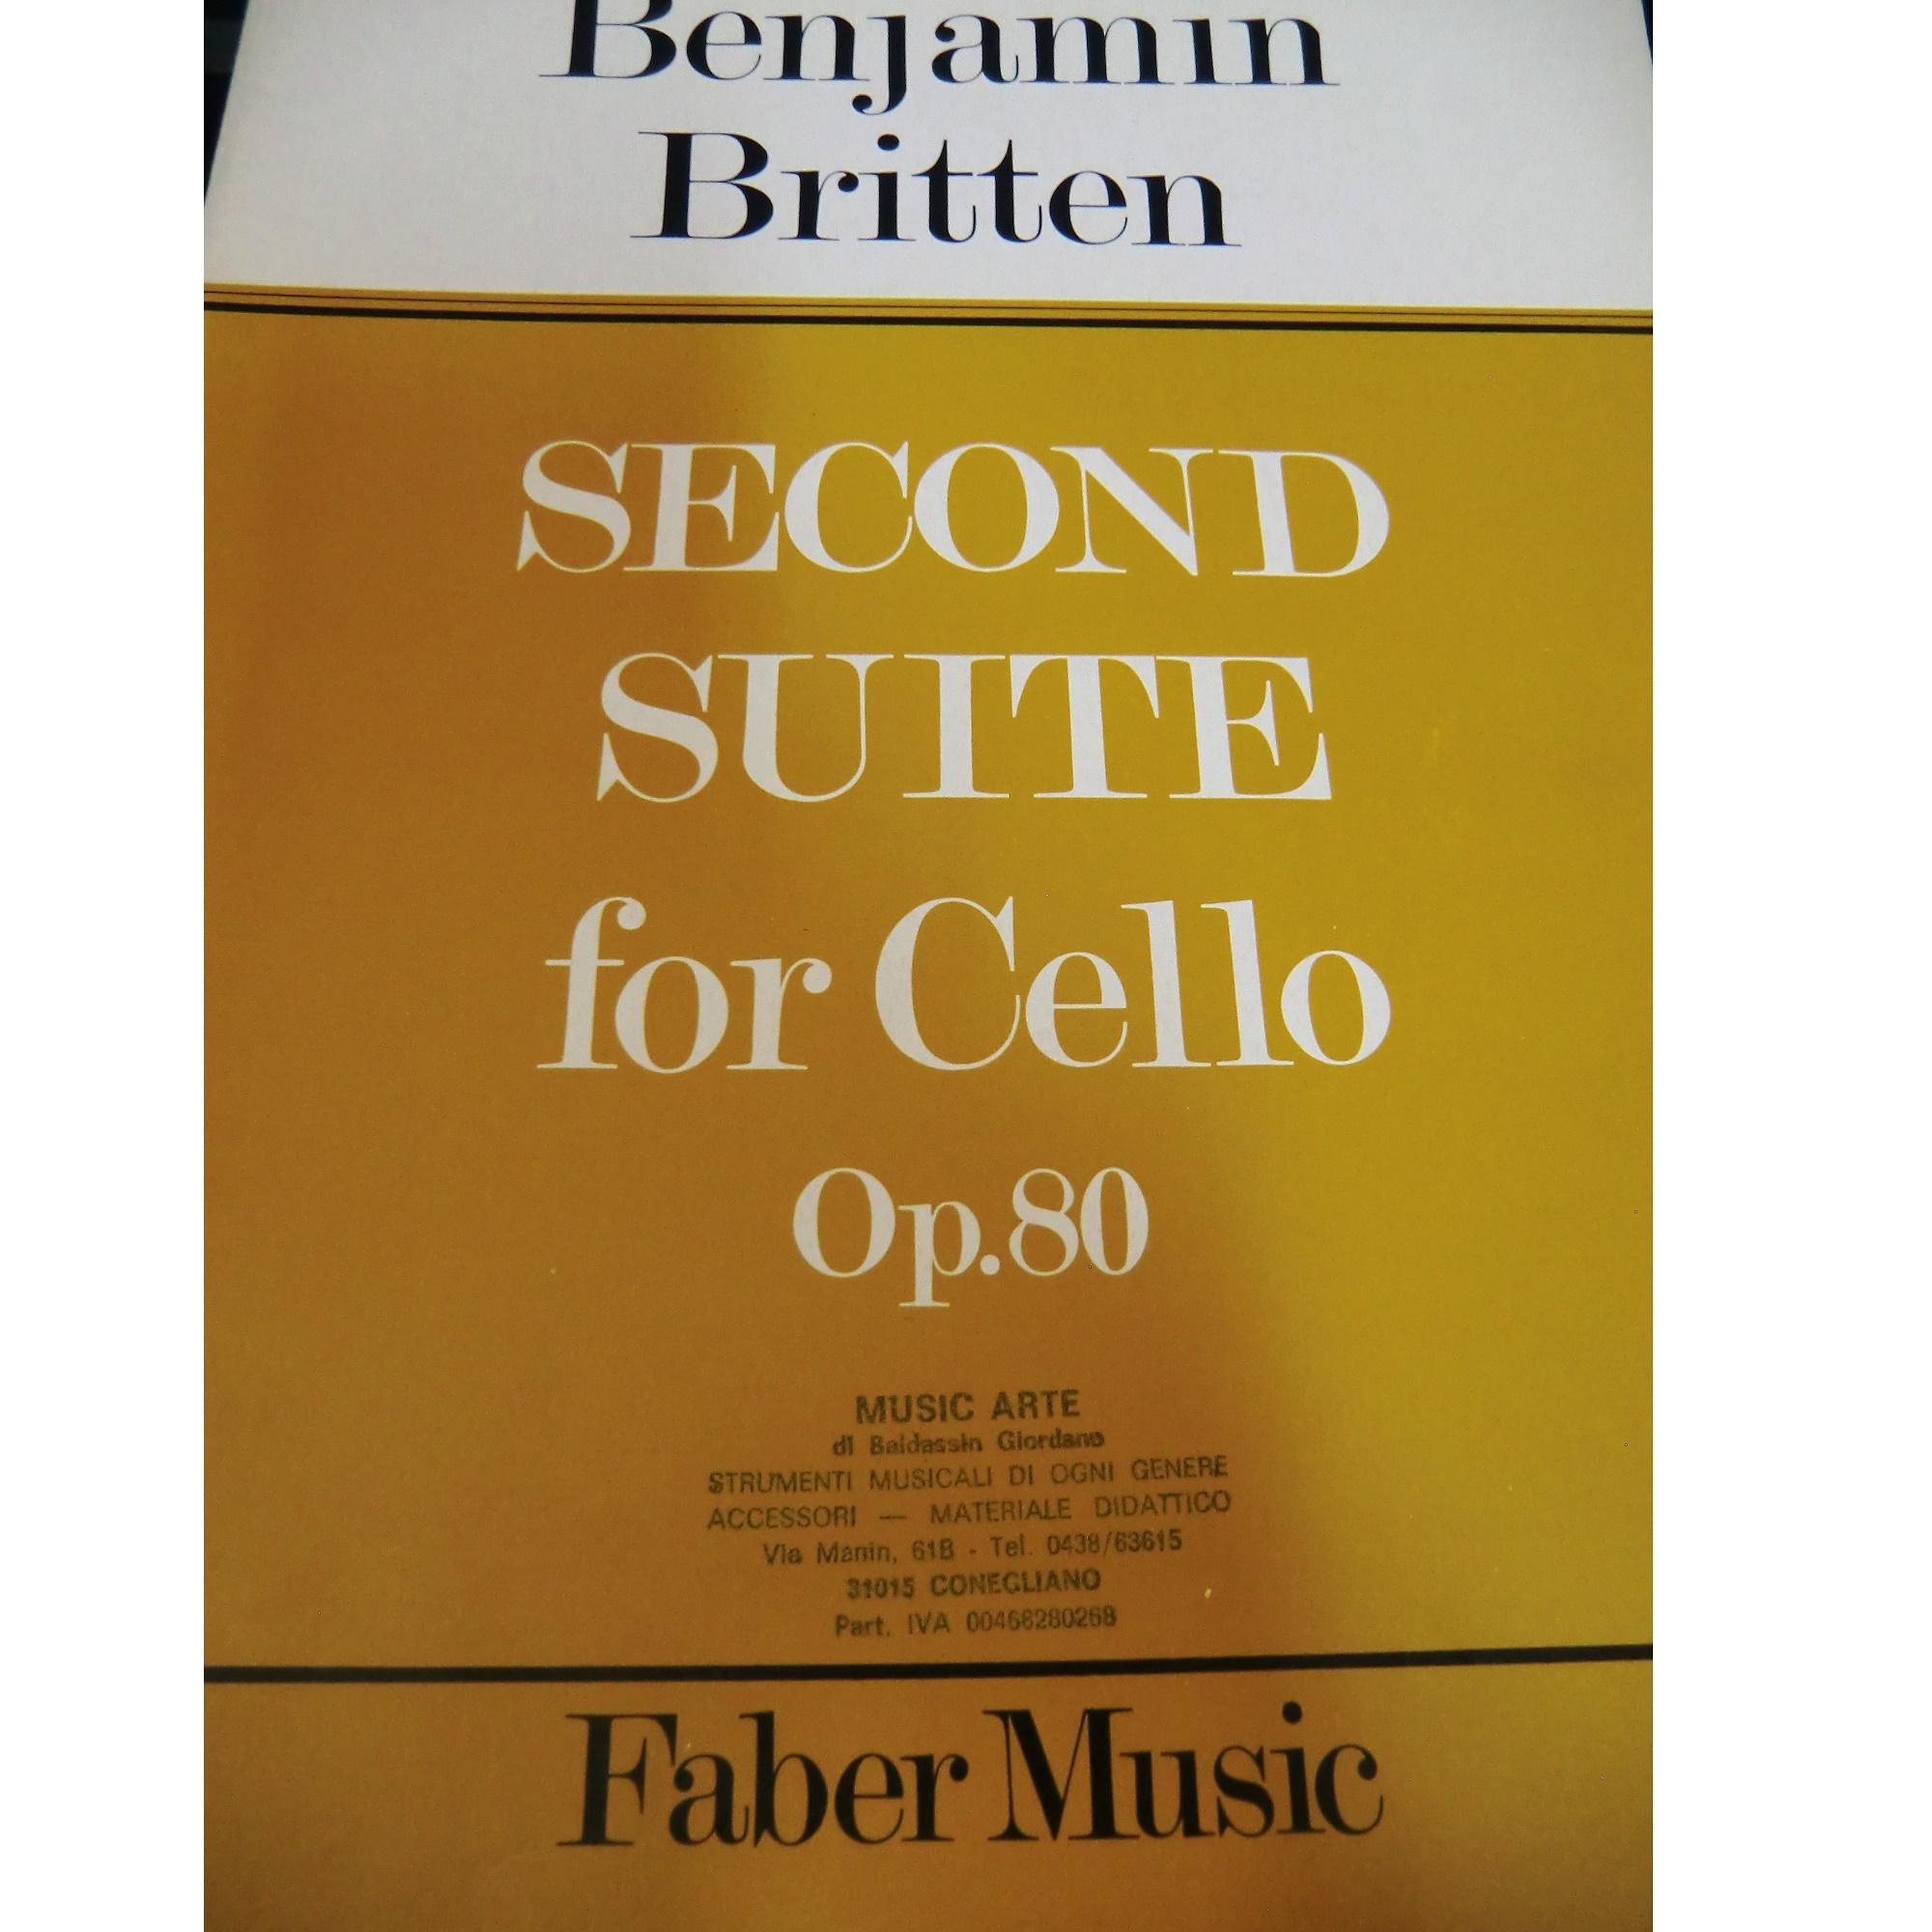 Benjamin Britten Second Suite for Cello Op. 80 - Faber Music